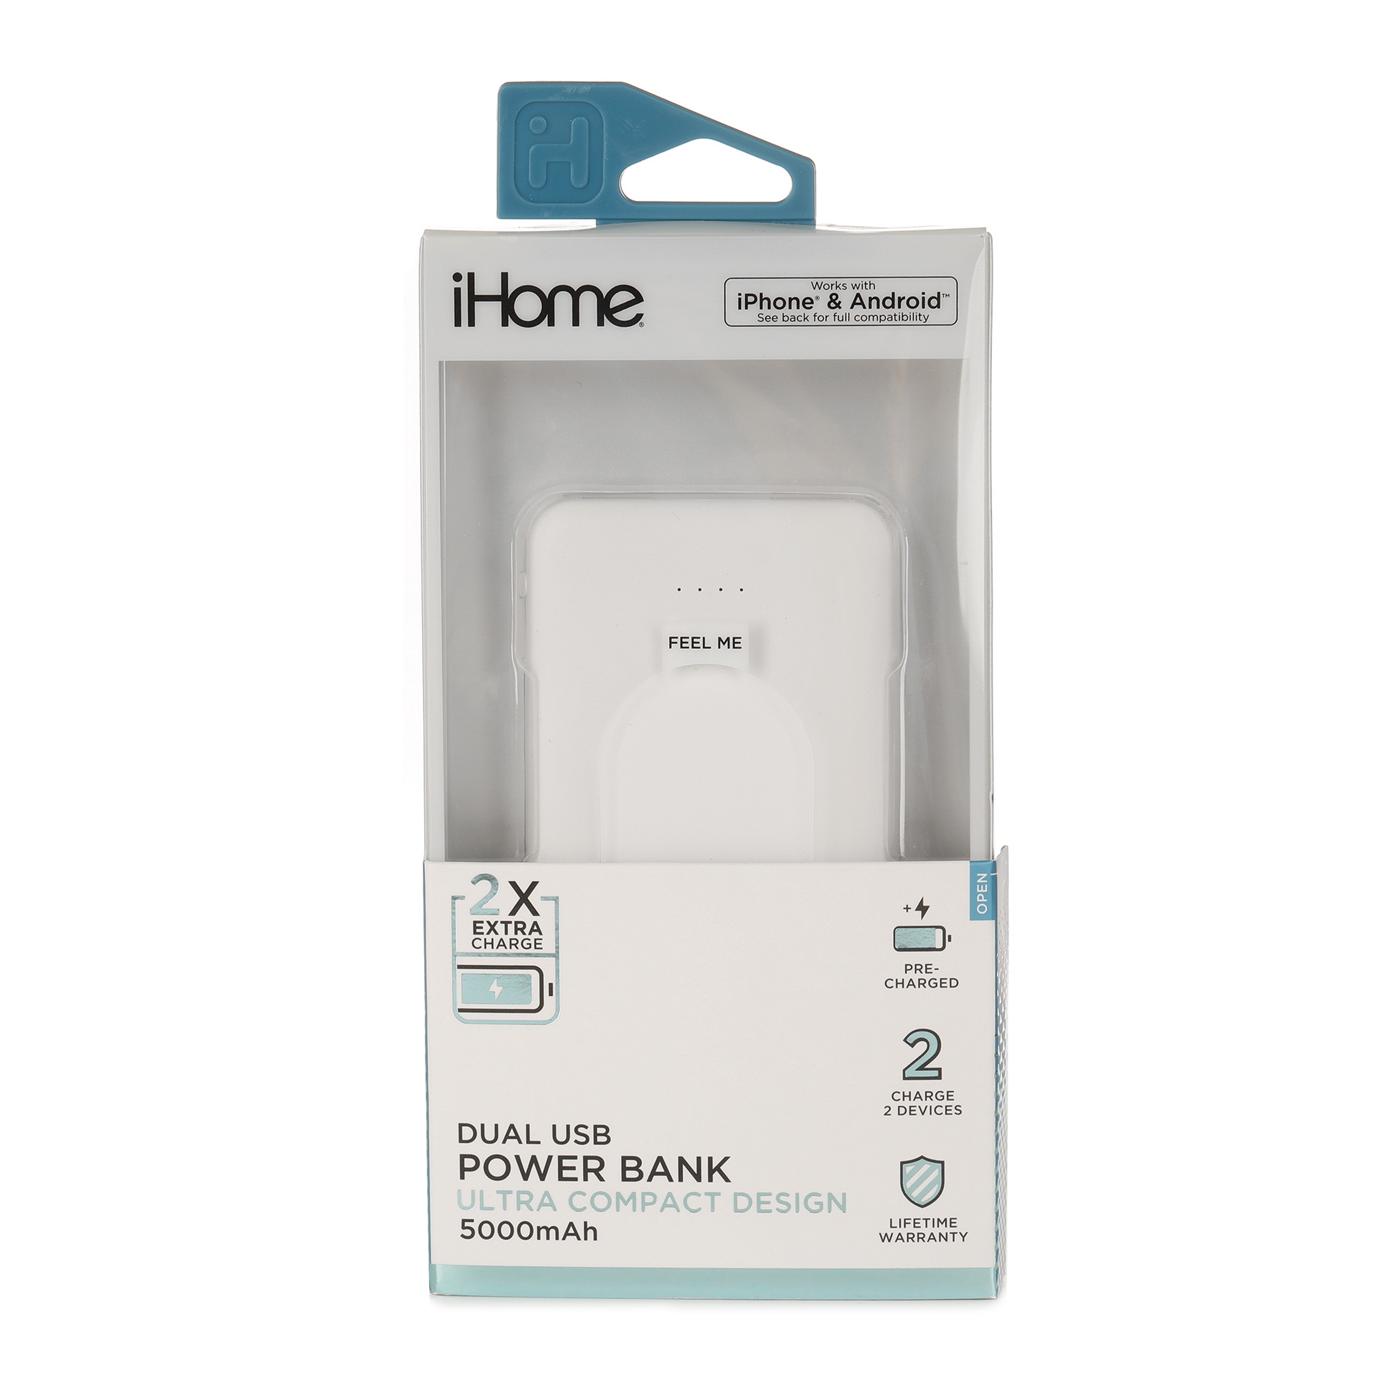 iHome Dual USB Portable Power Bank - White; image 1 of 2